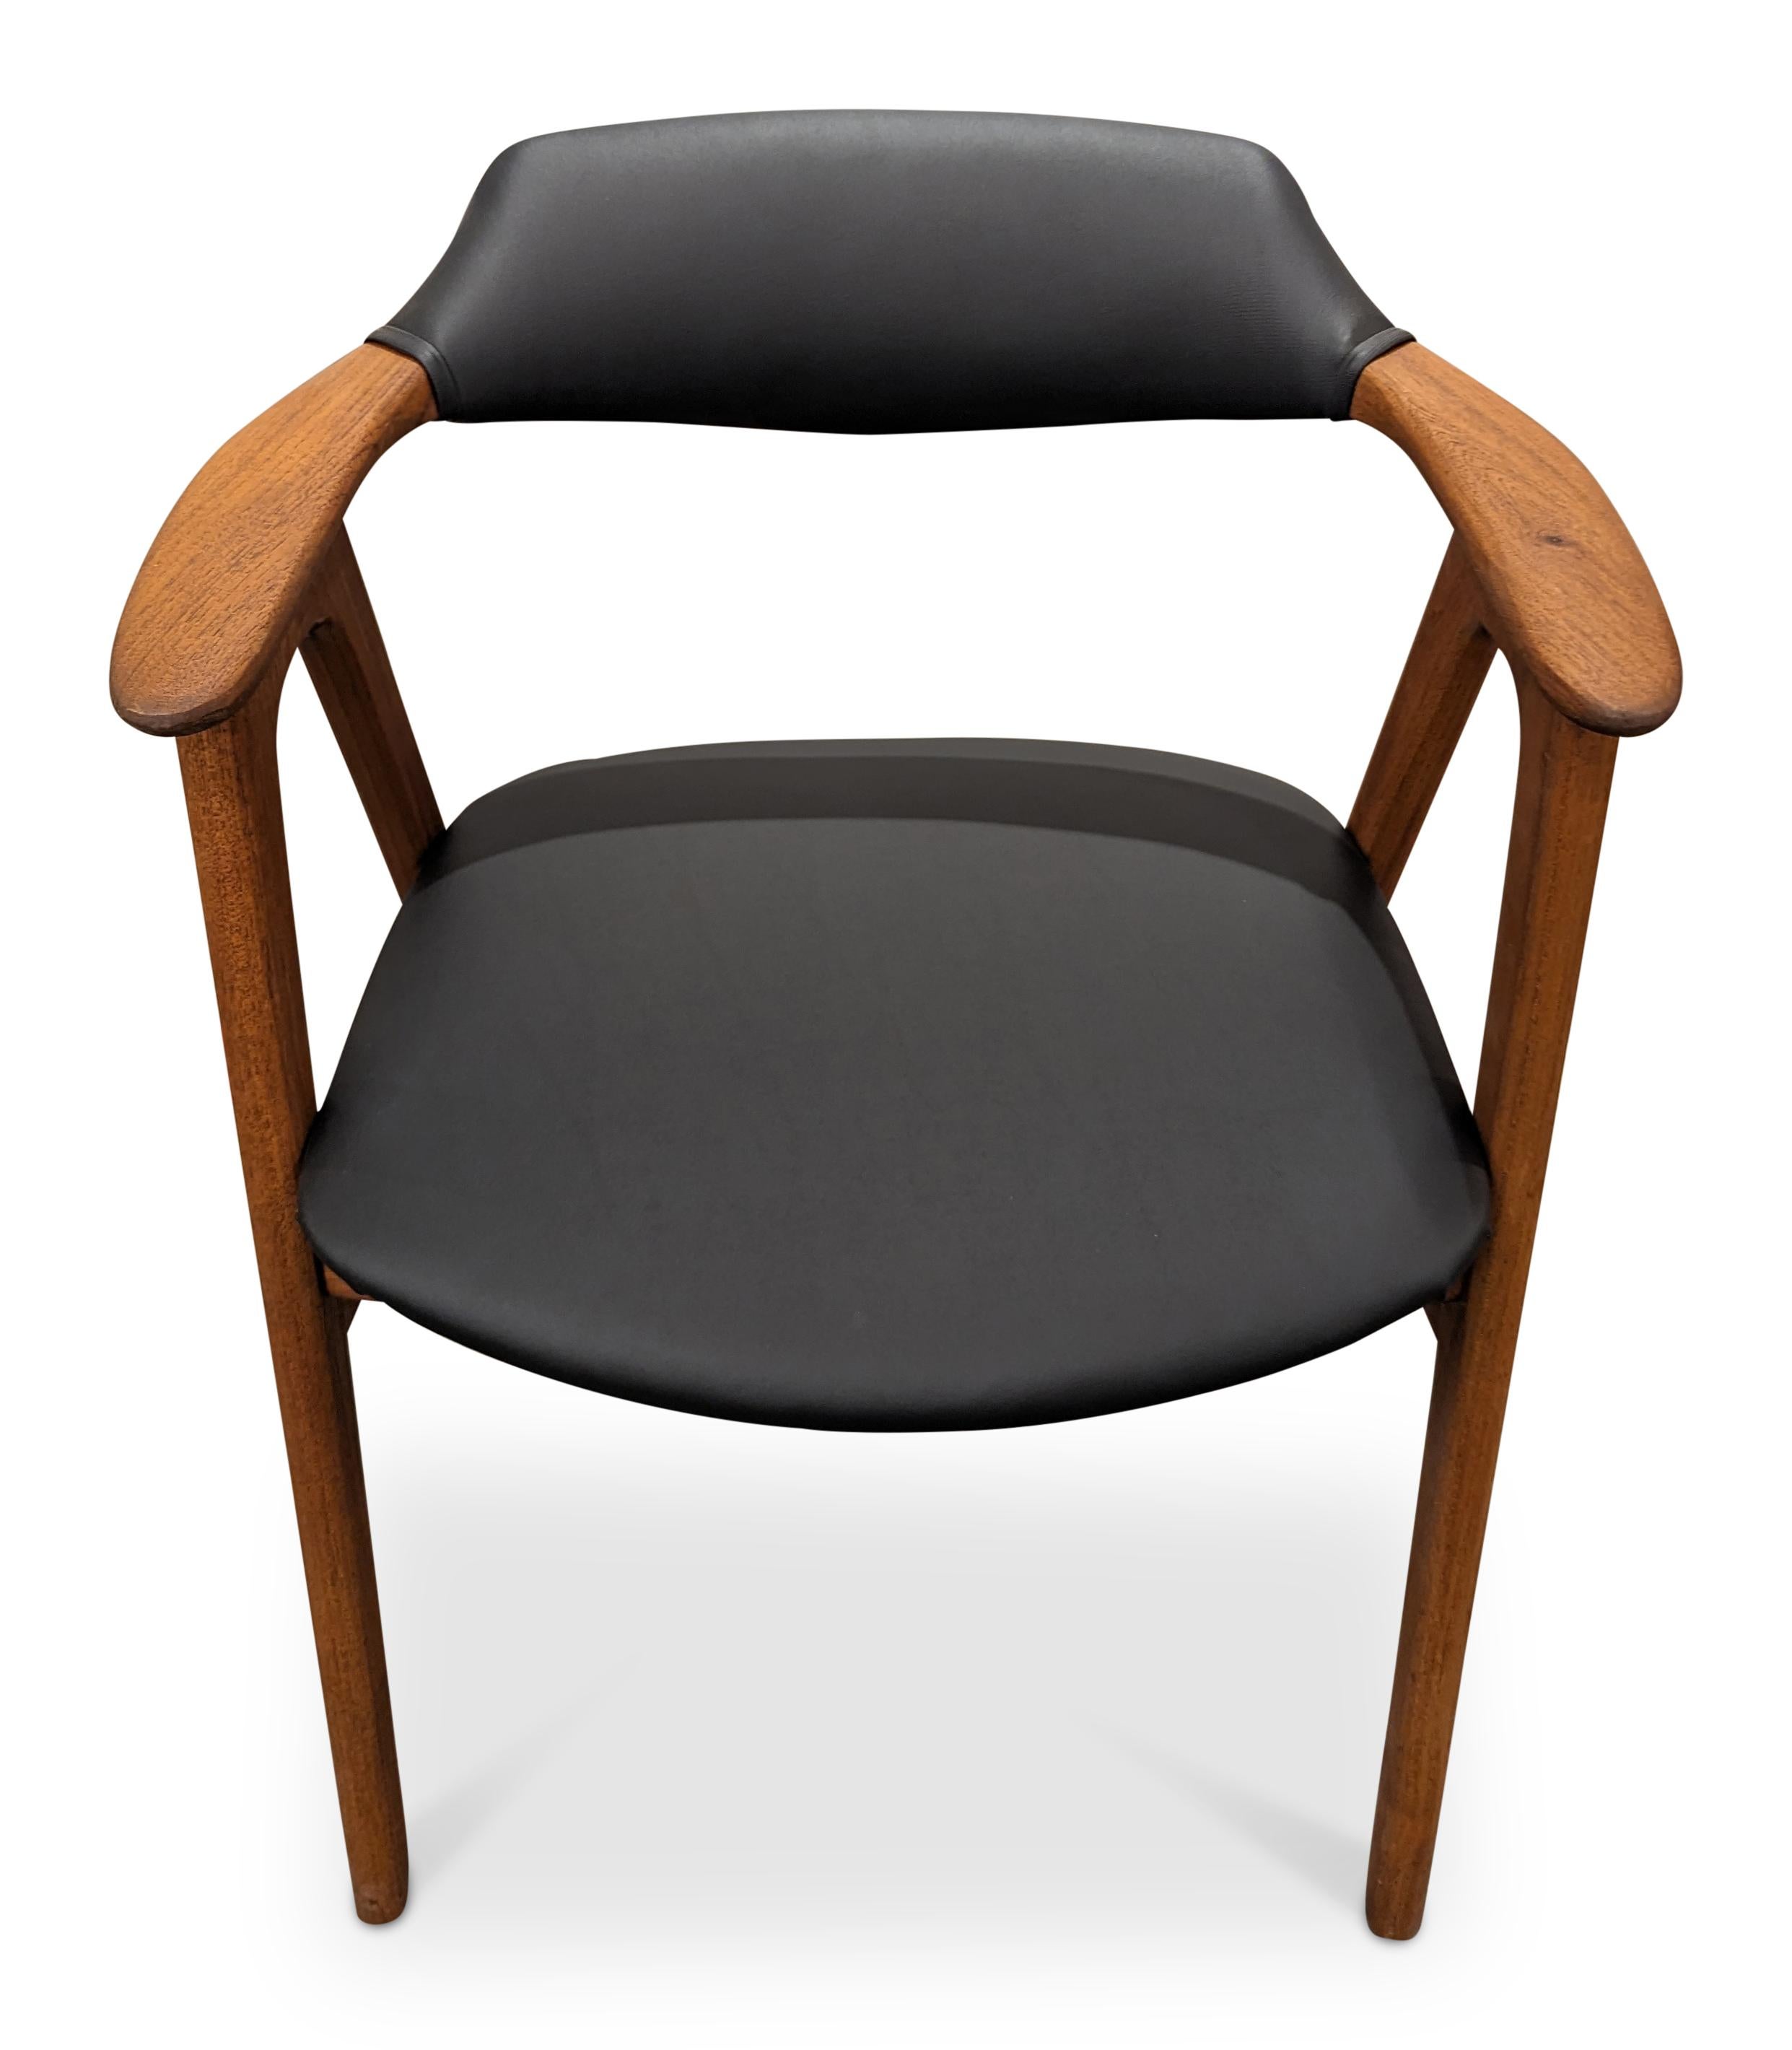  Vintage Danish Mid Century Erik Kirkegaard Arm Chair - 022430 1